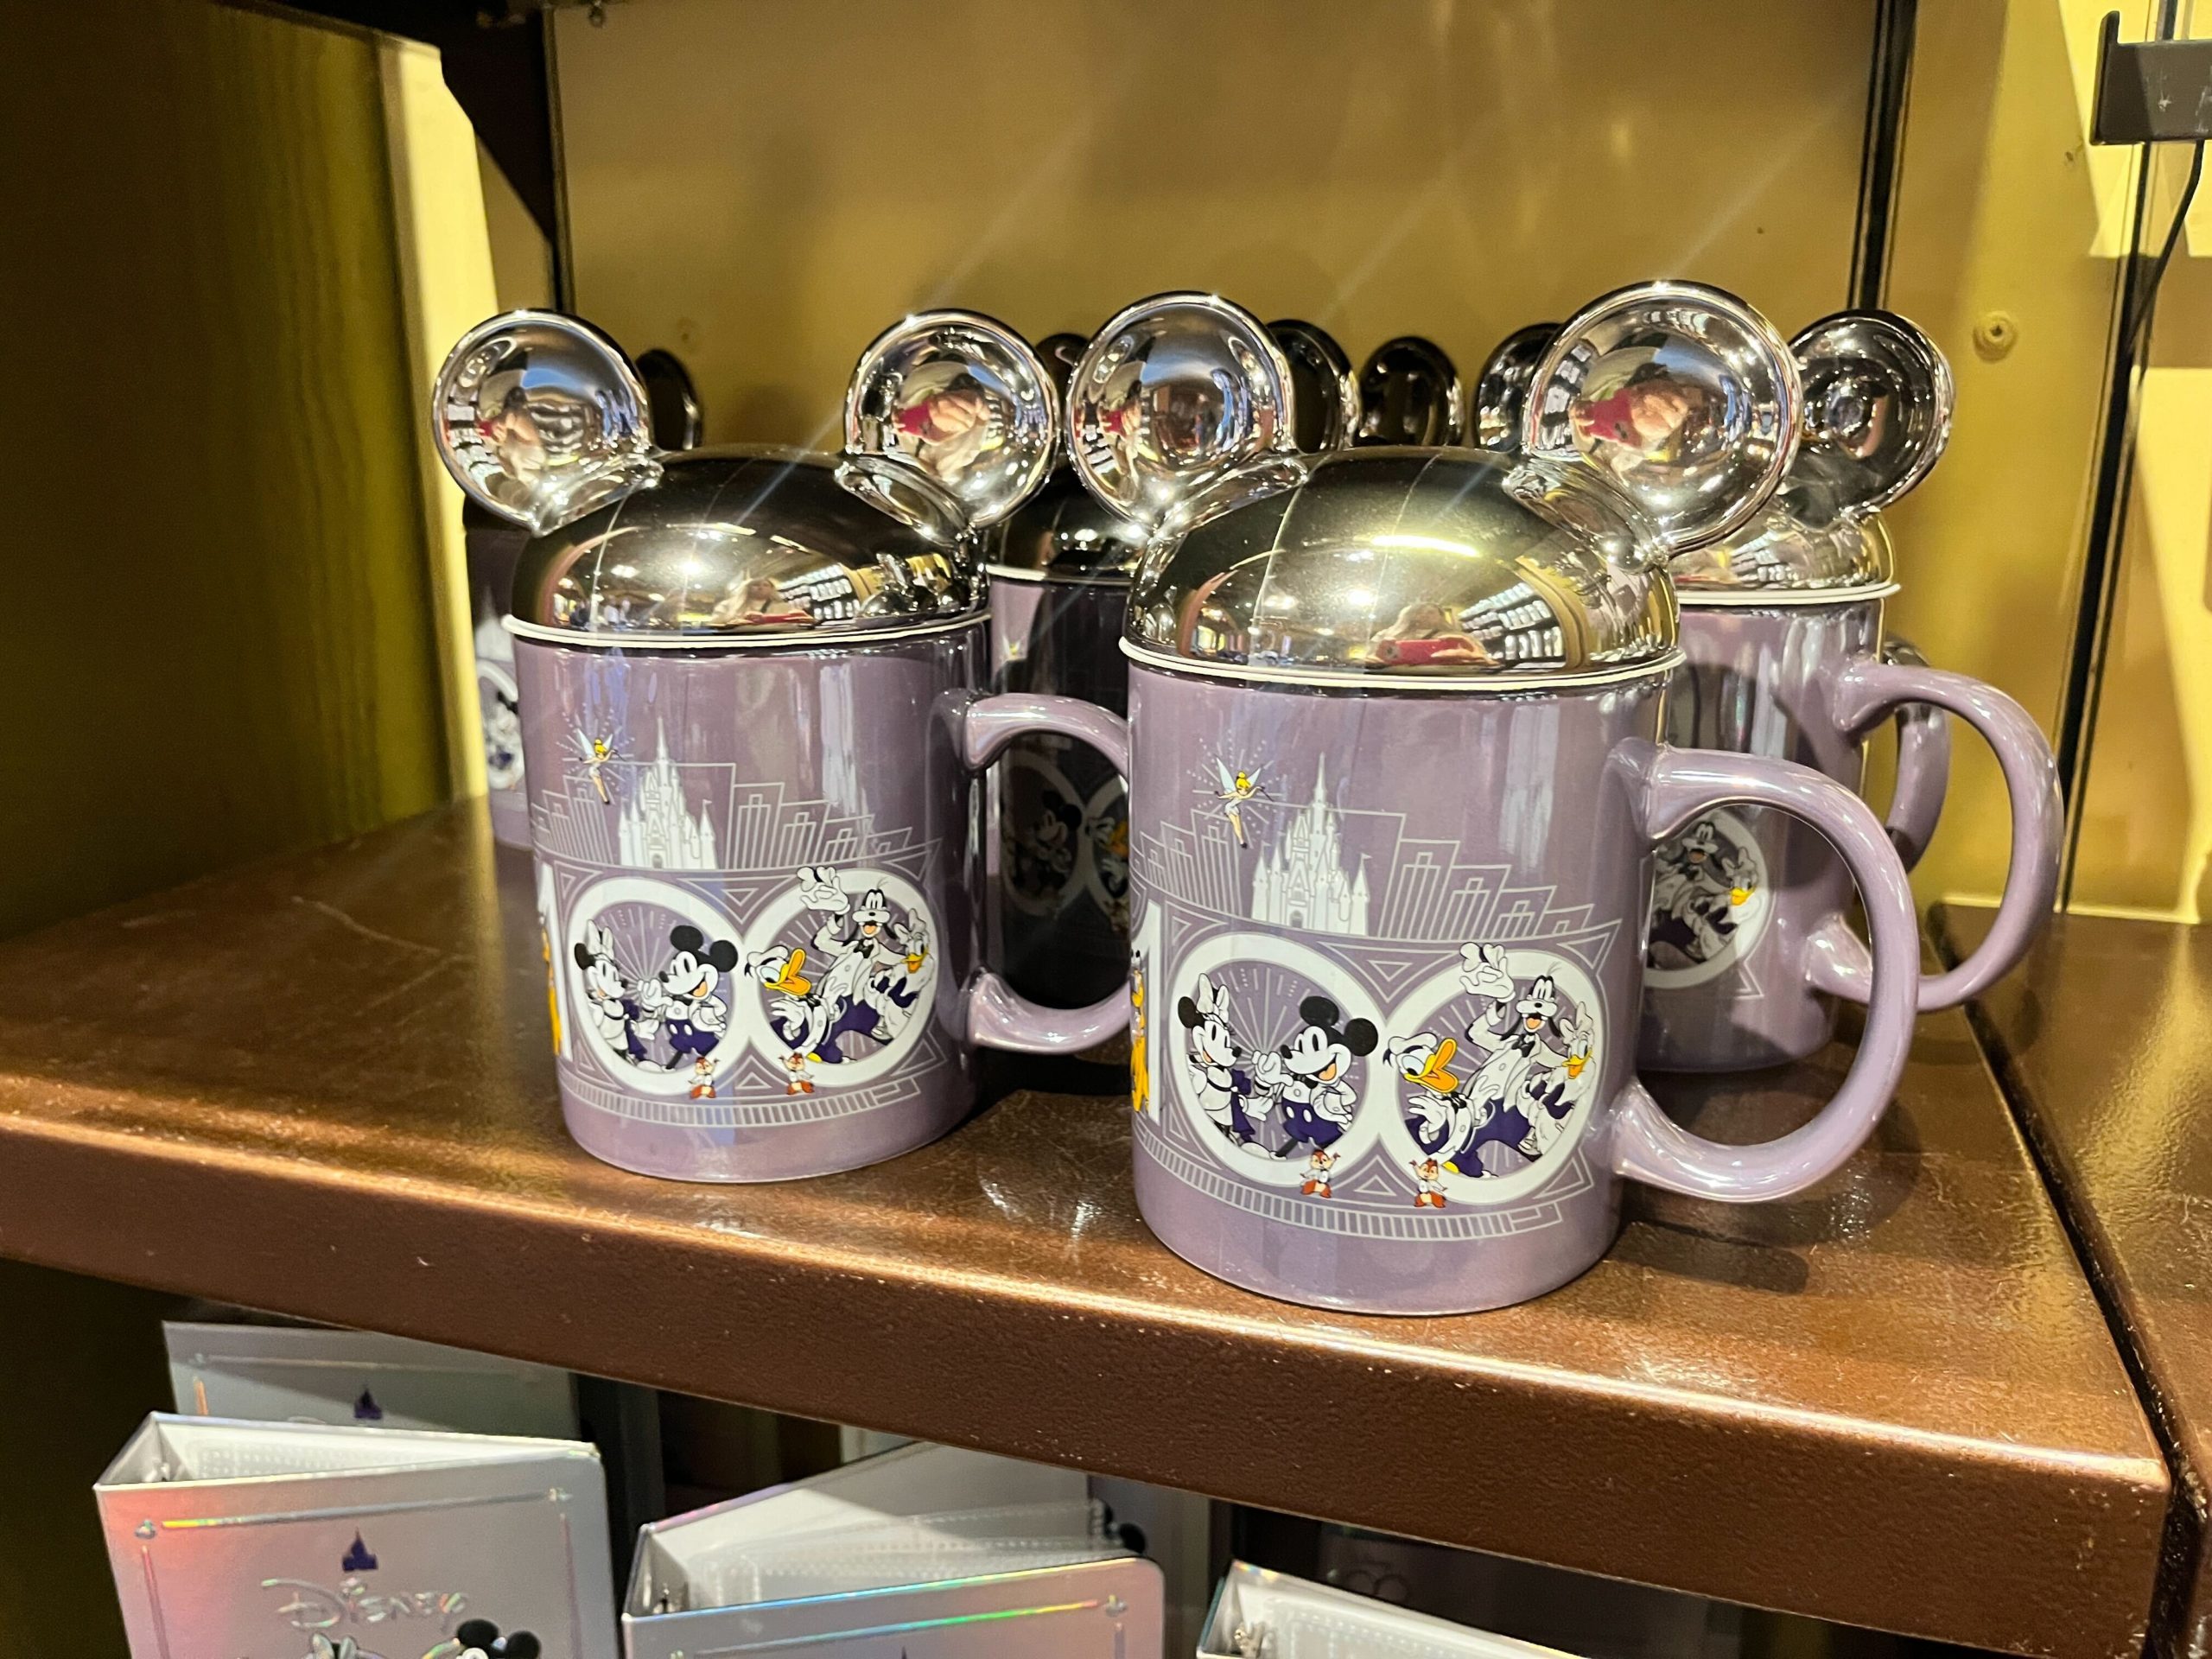 Walt Disney World Share A Dream Come True 100 Years Of Magic Mug Disney